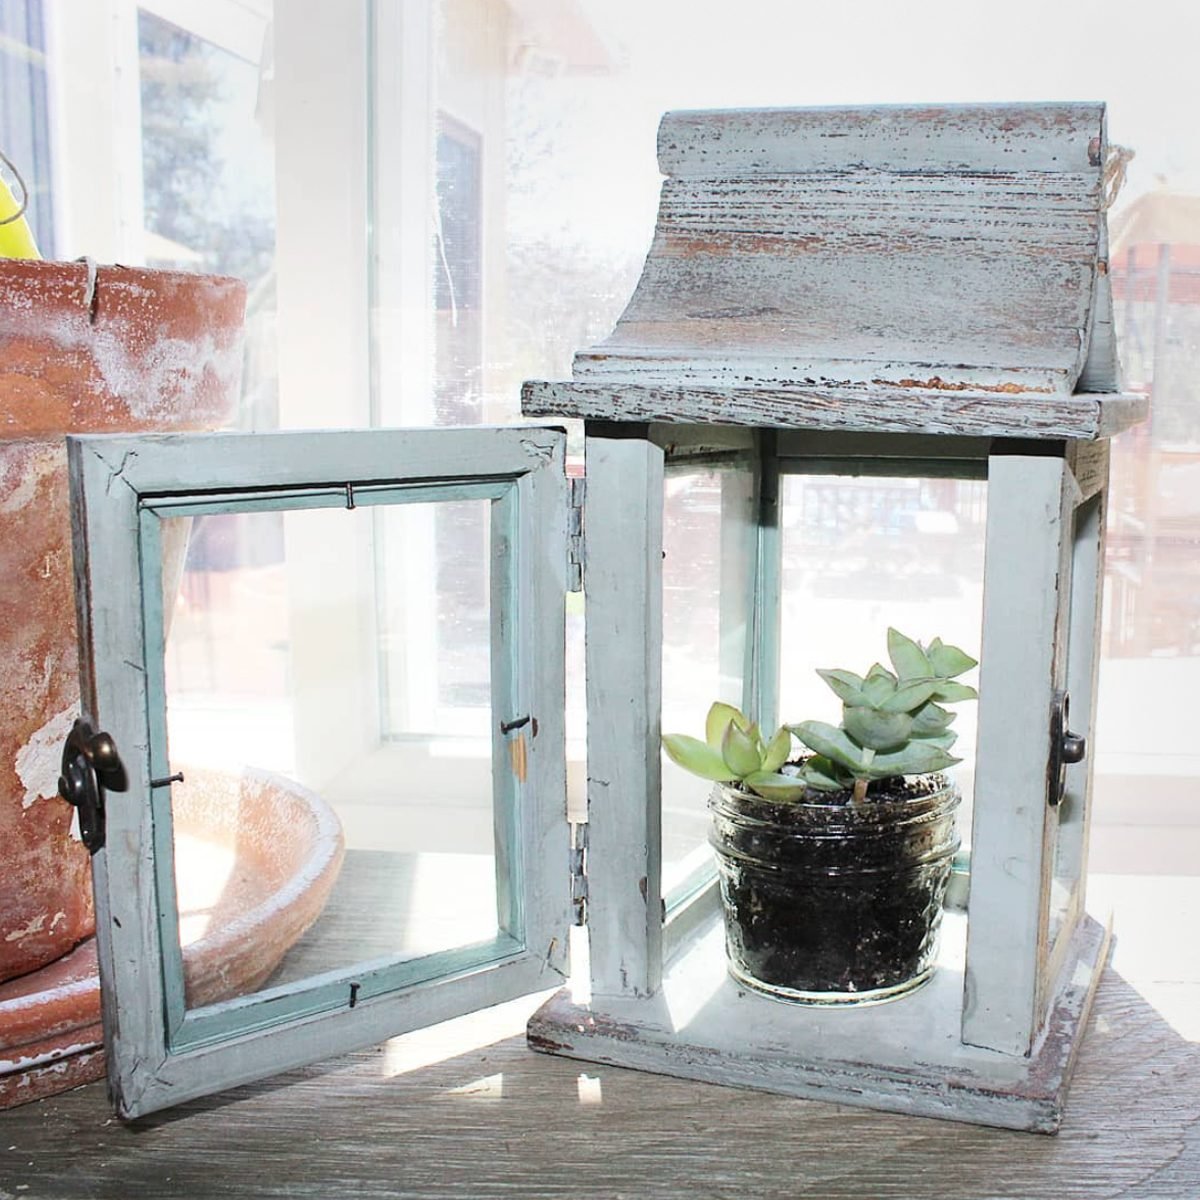 Mini Greenhouse Lantern Courtesy @krisreneeauthor Via Instagram